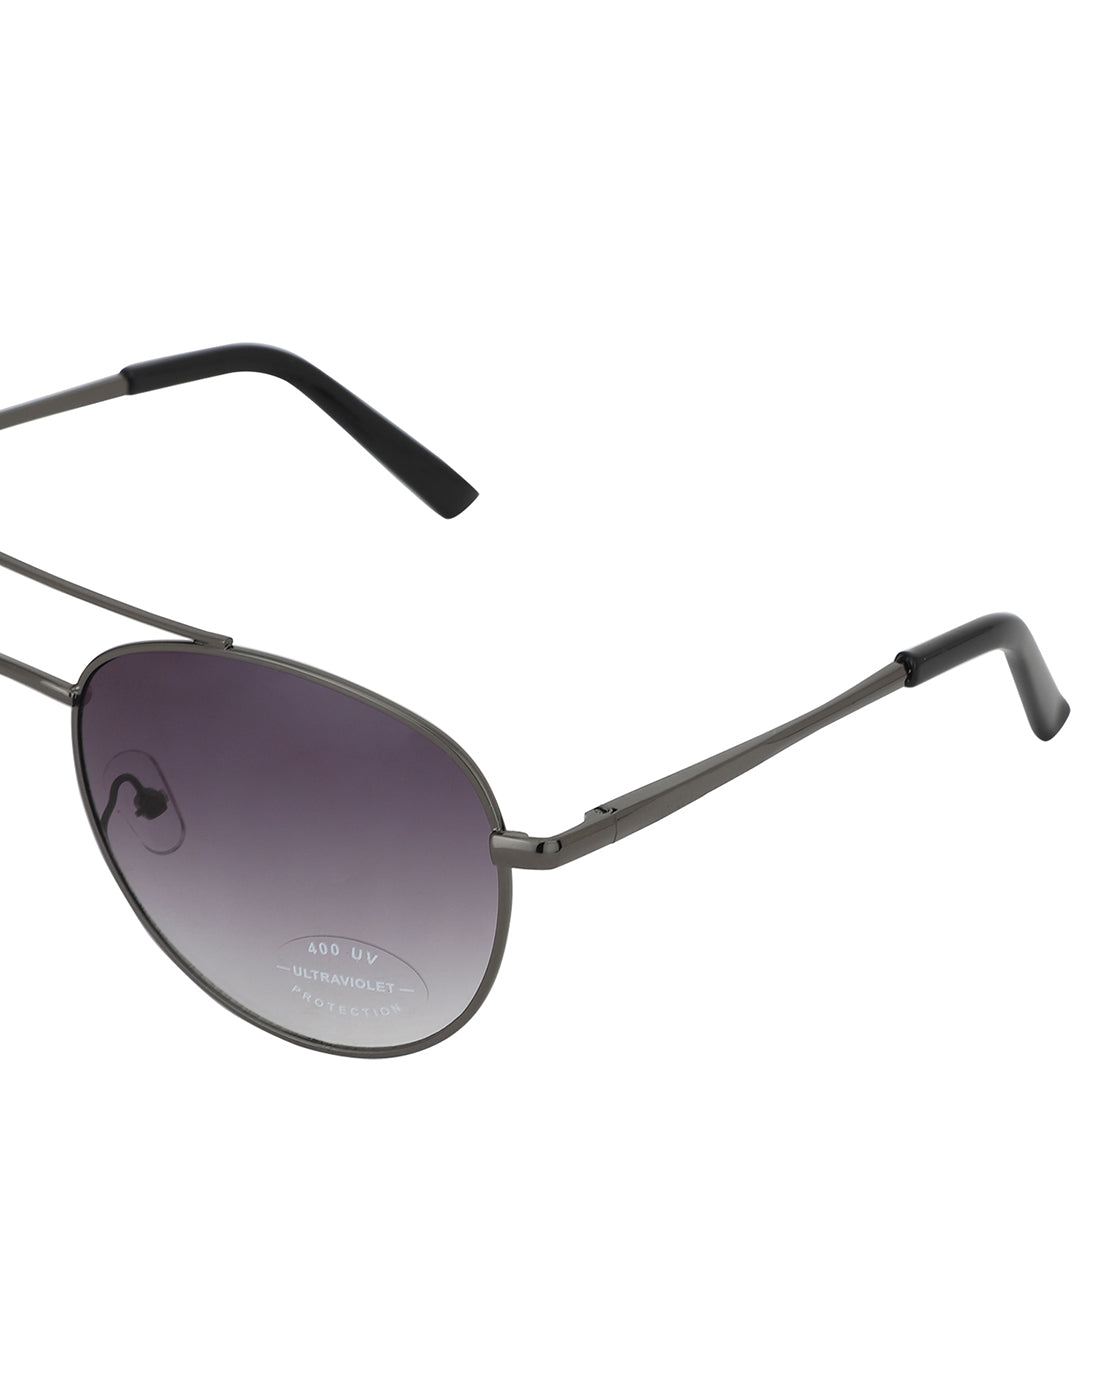 Carlton London Grey Aviator Sunglasses With Uv Protected Lens For Men